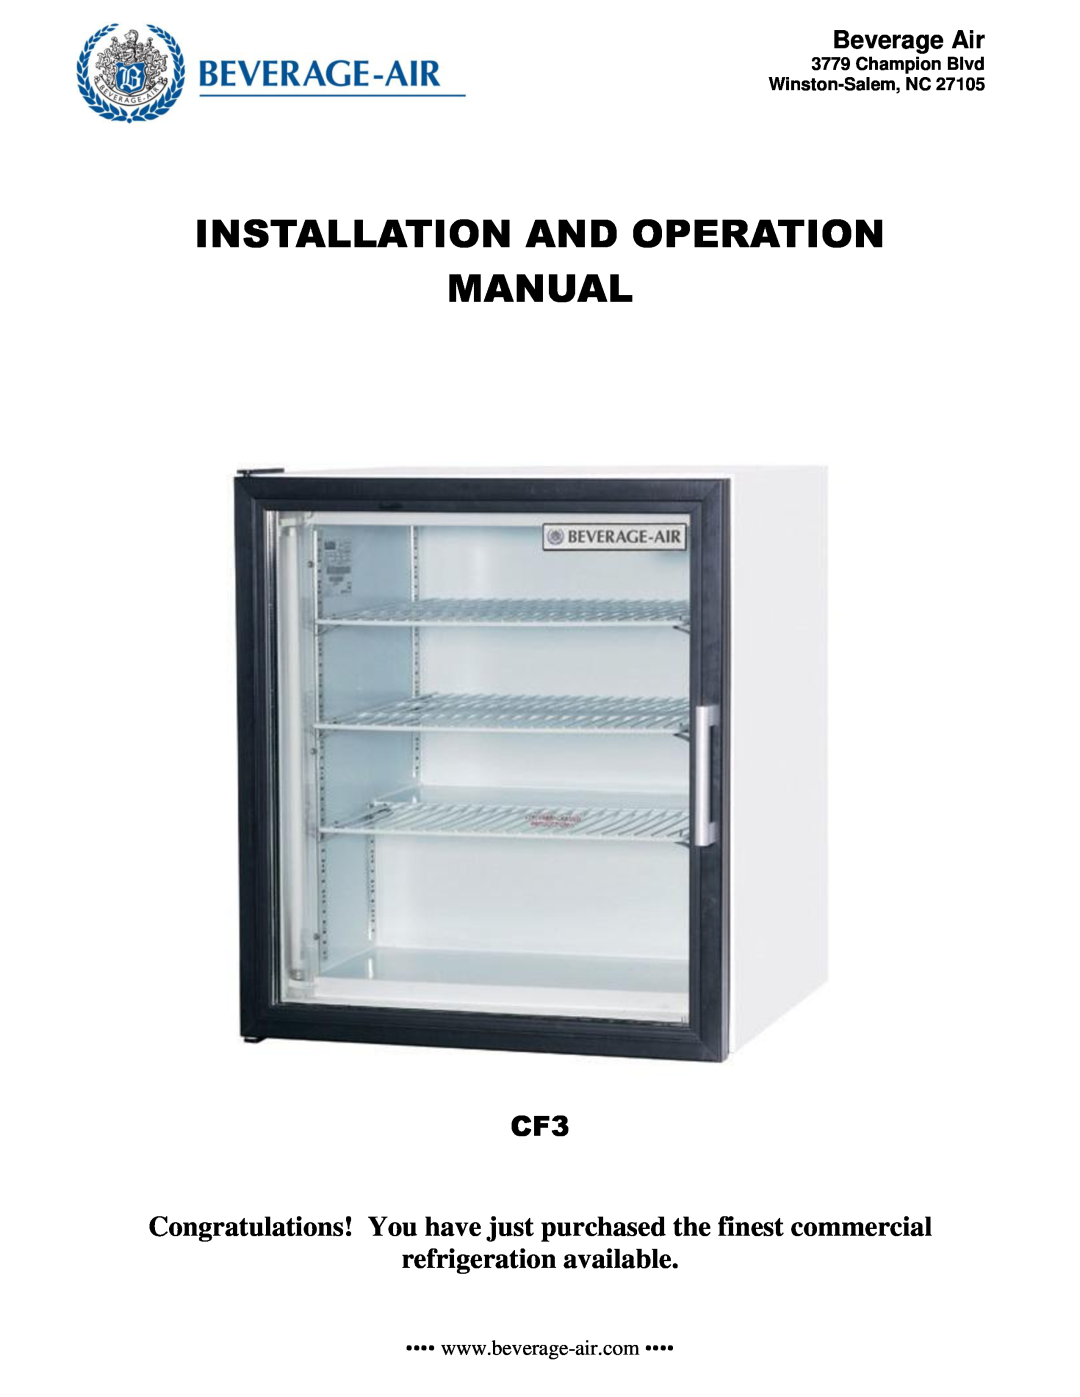 Beverage-Air CF-3 operation manual Beverage Air, refrigeration available, Champion Blvd Winston-Salem,NC 